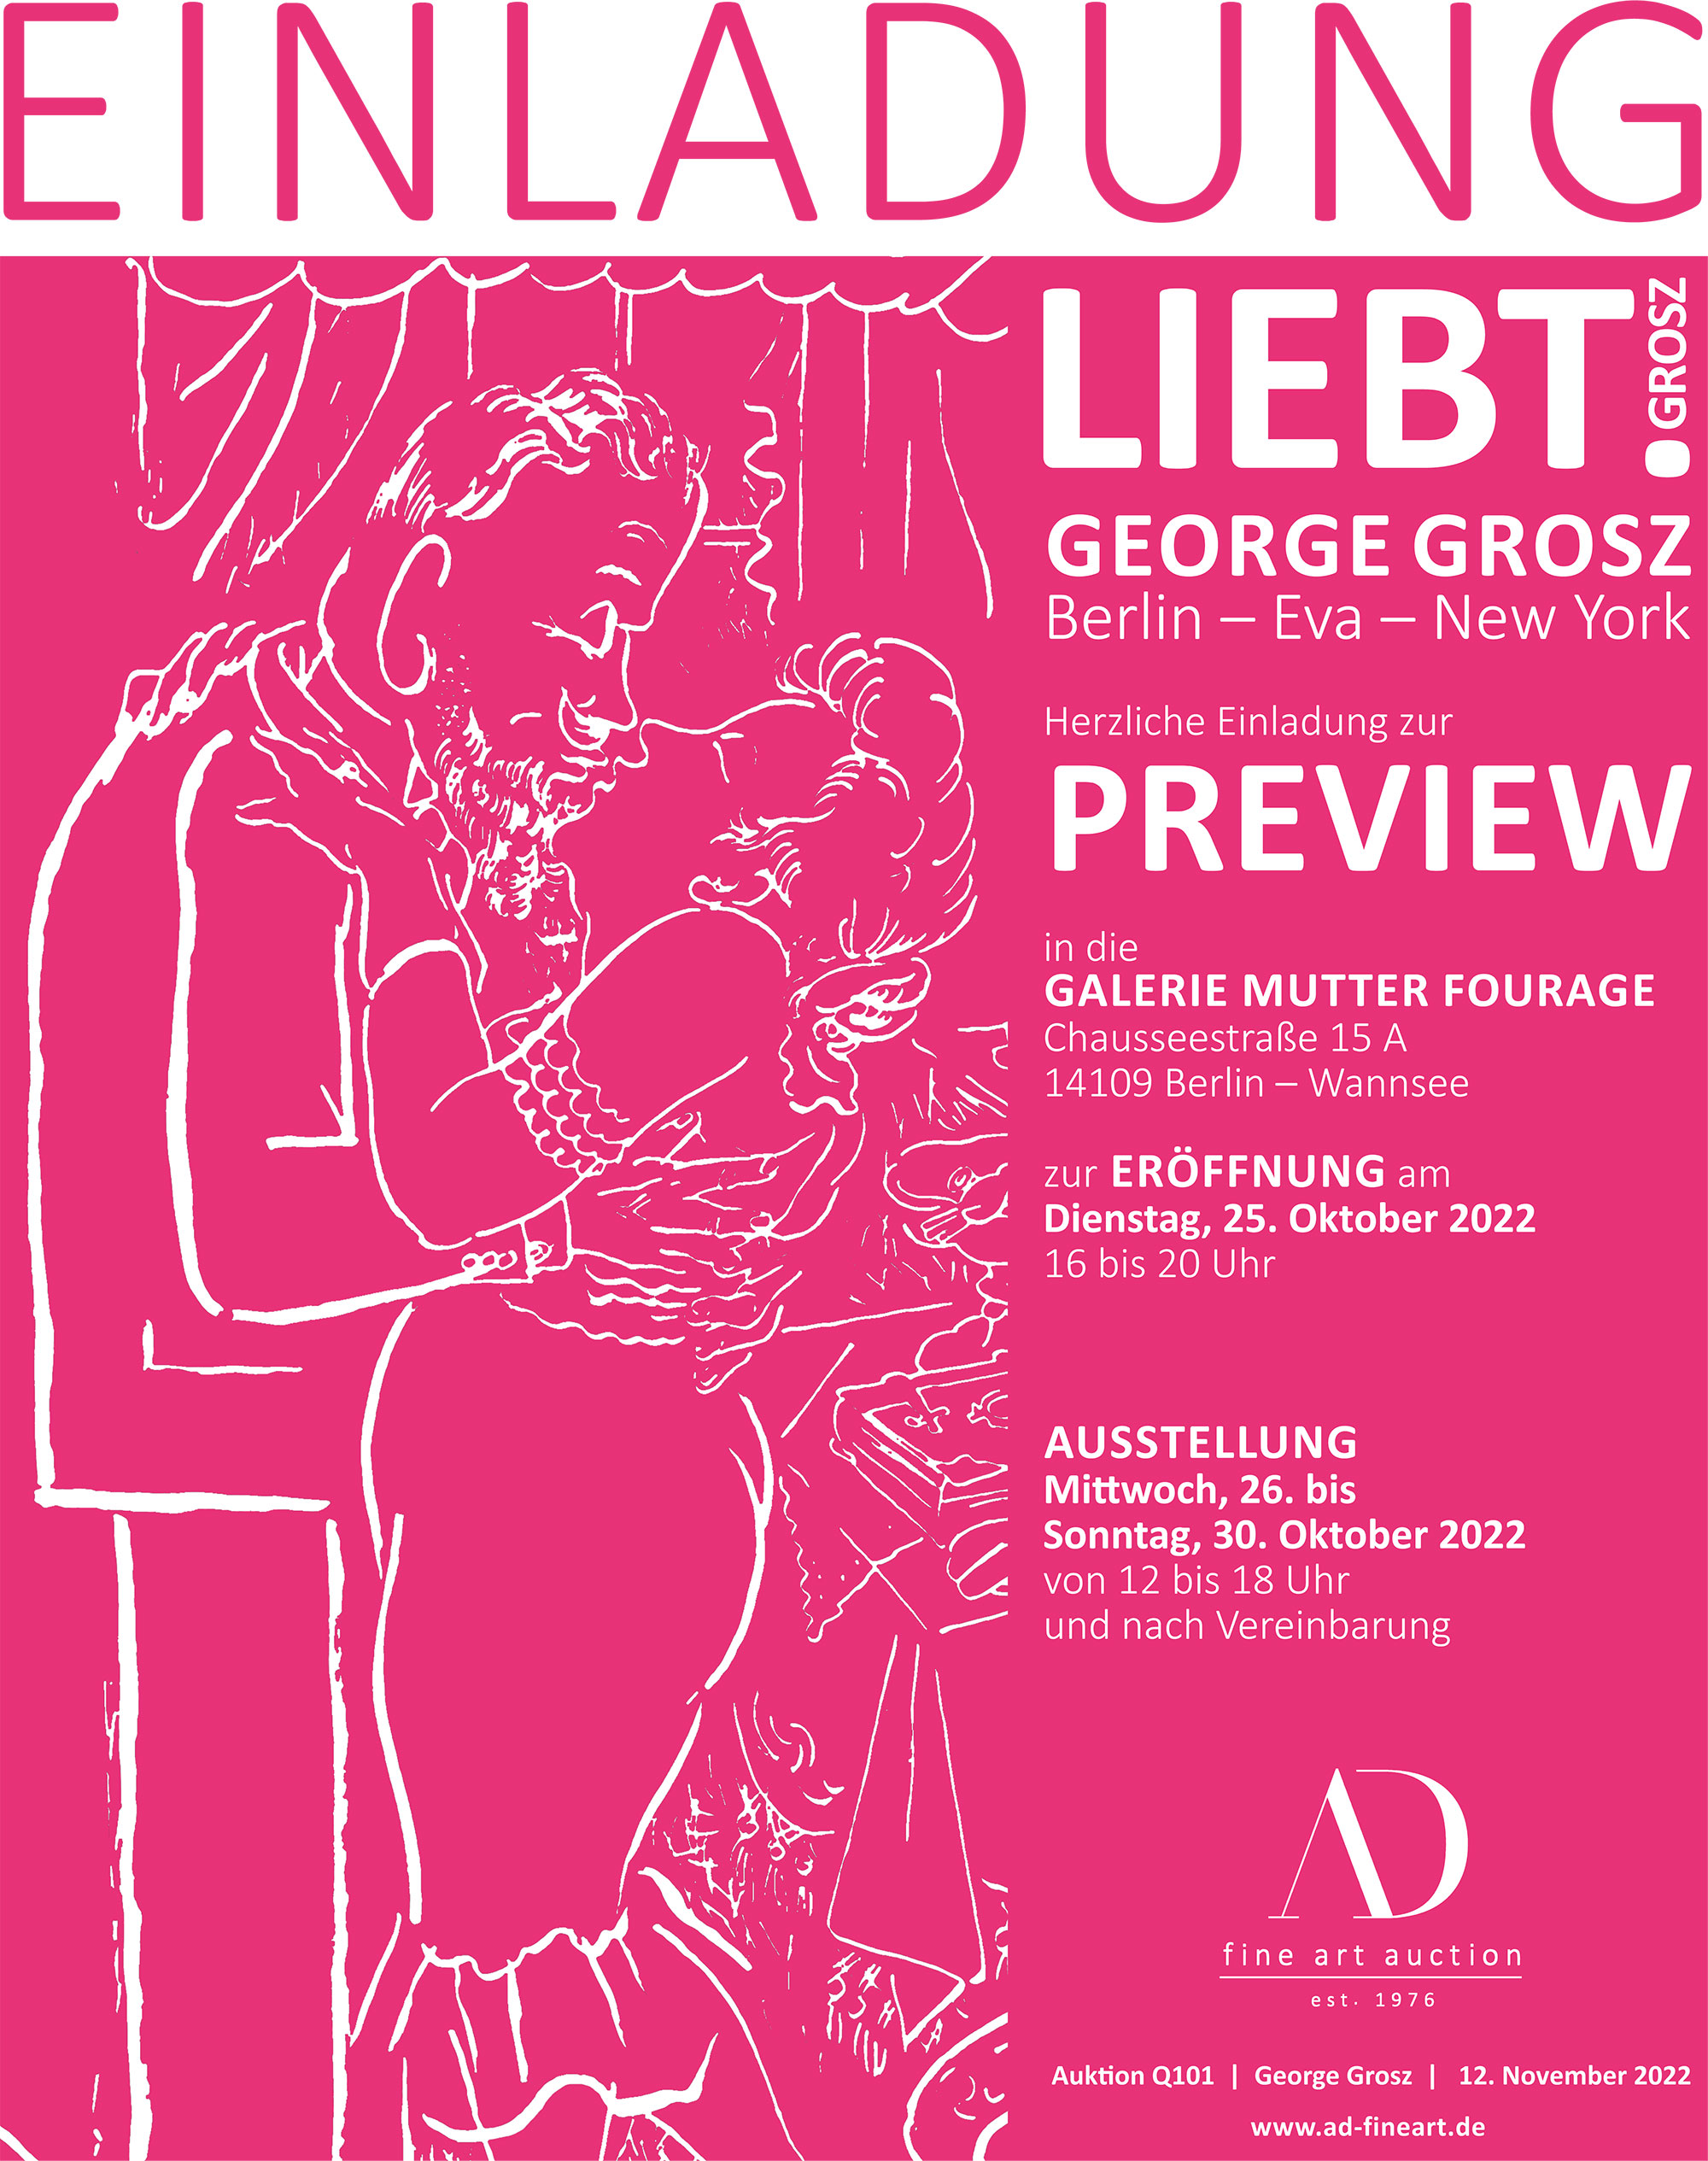 George Grosz. Liebt! Berlin – Eva – New York